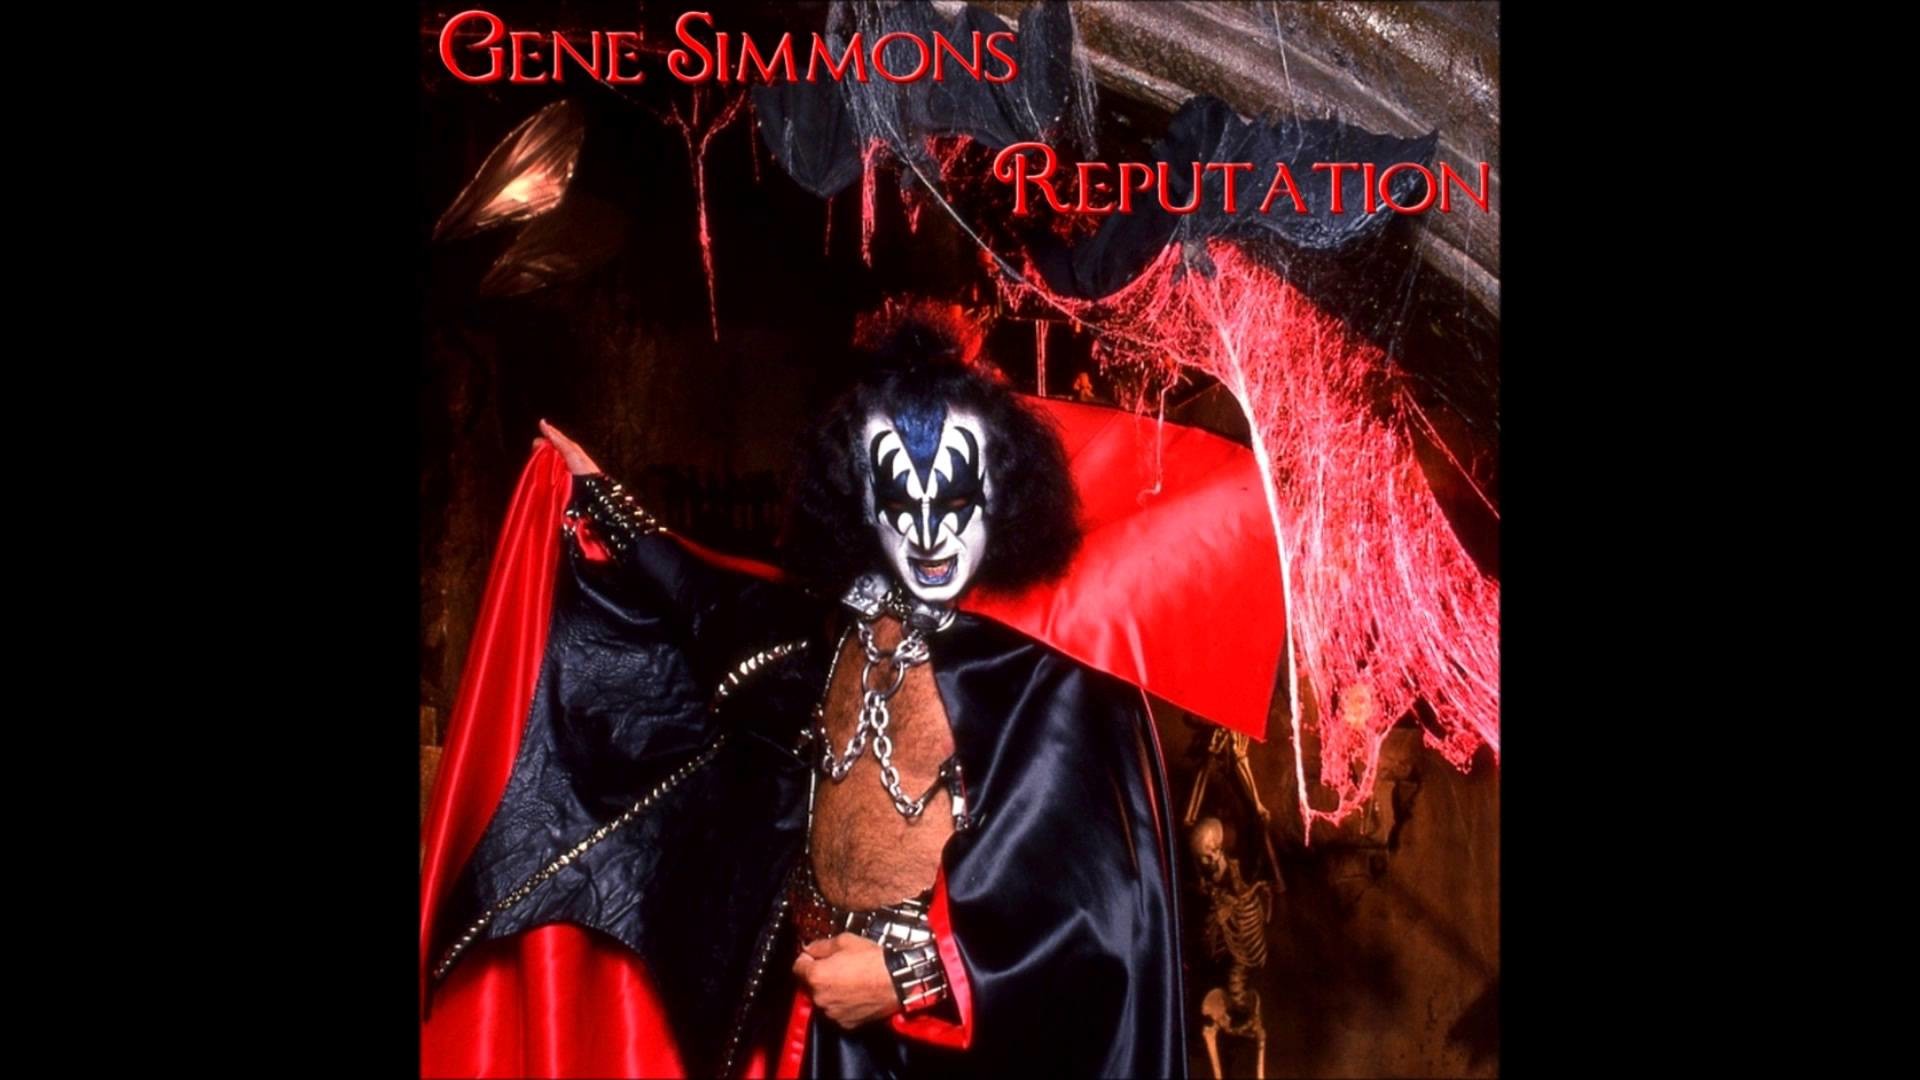 1920x1080 Gene Simmons - Reputation (1978)